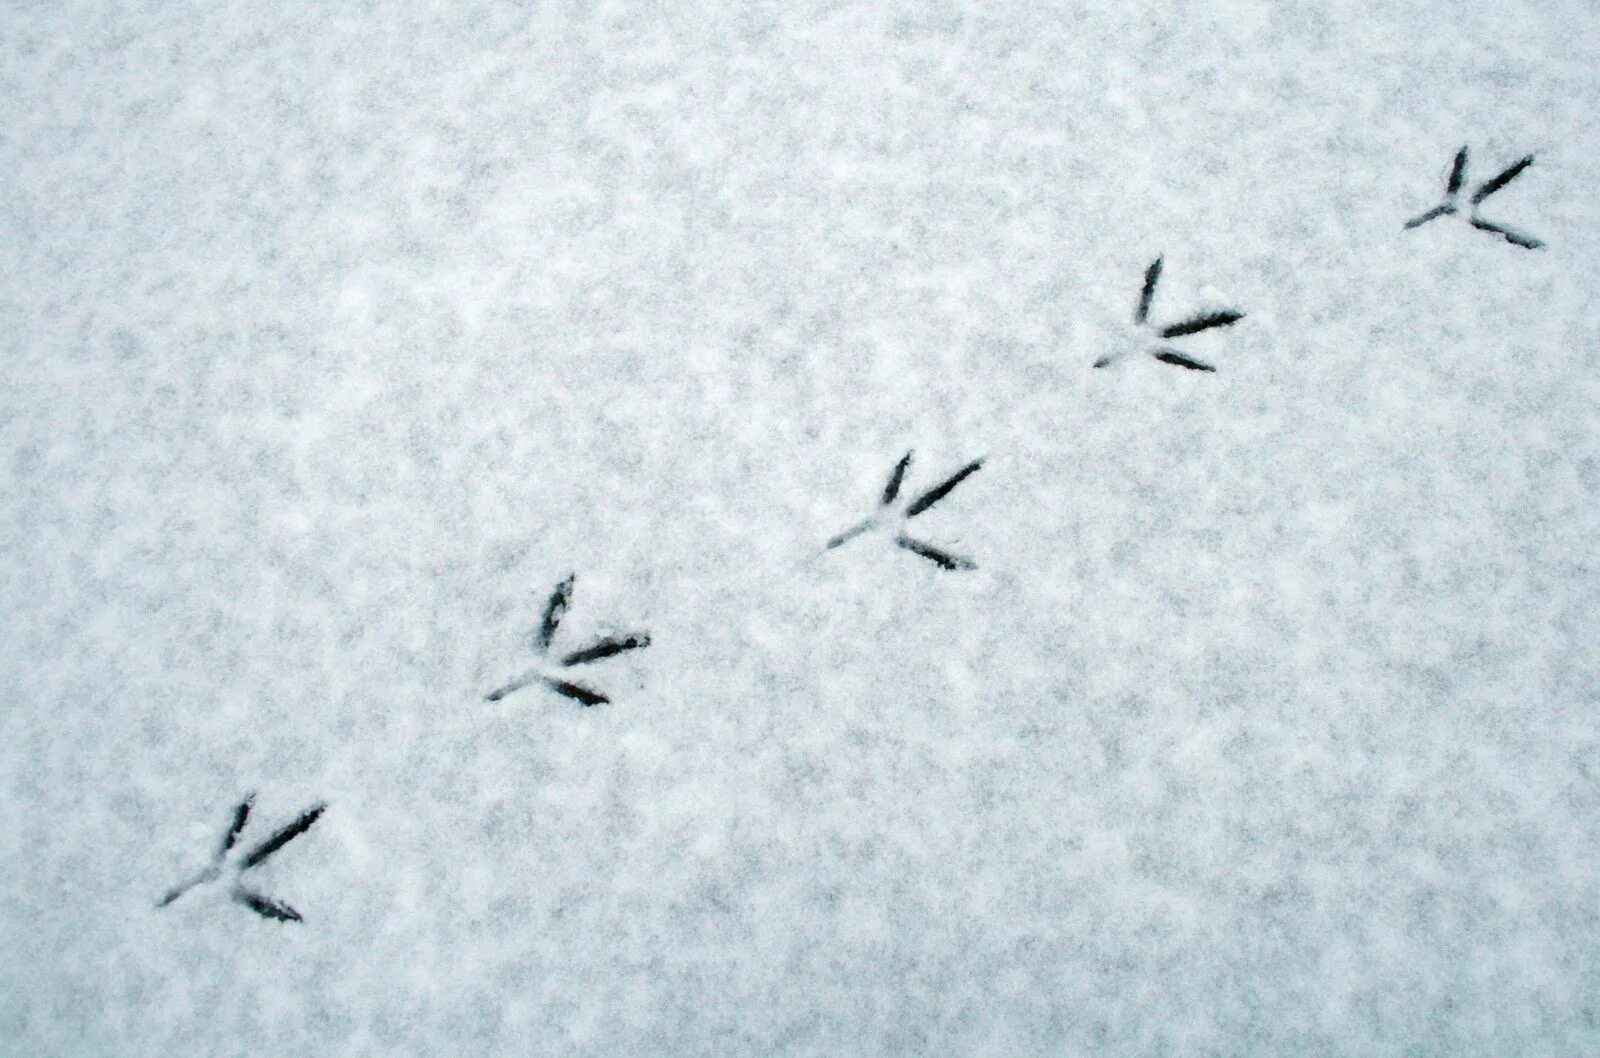 Следы птиц. Следы зимующих птиц. Следы птичек на снегу. Отпечатки птиц на снегу.